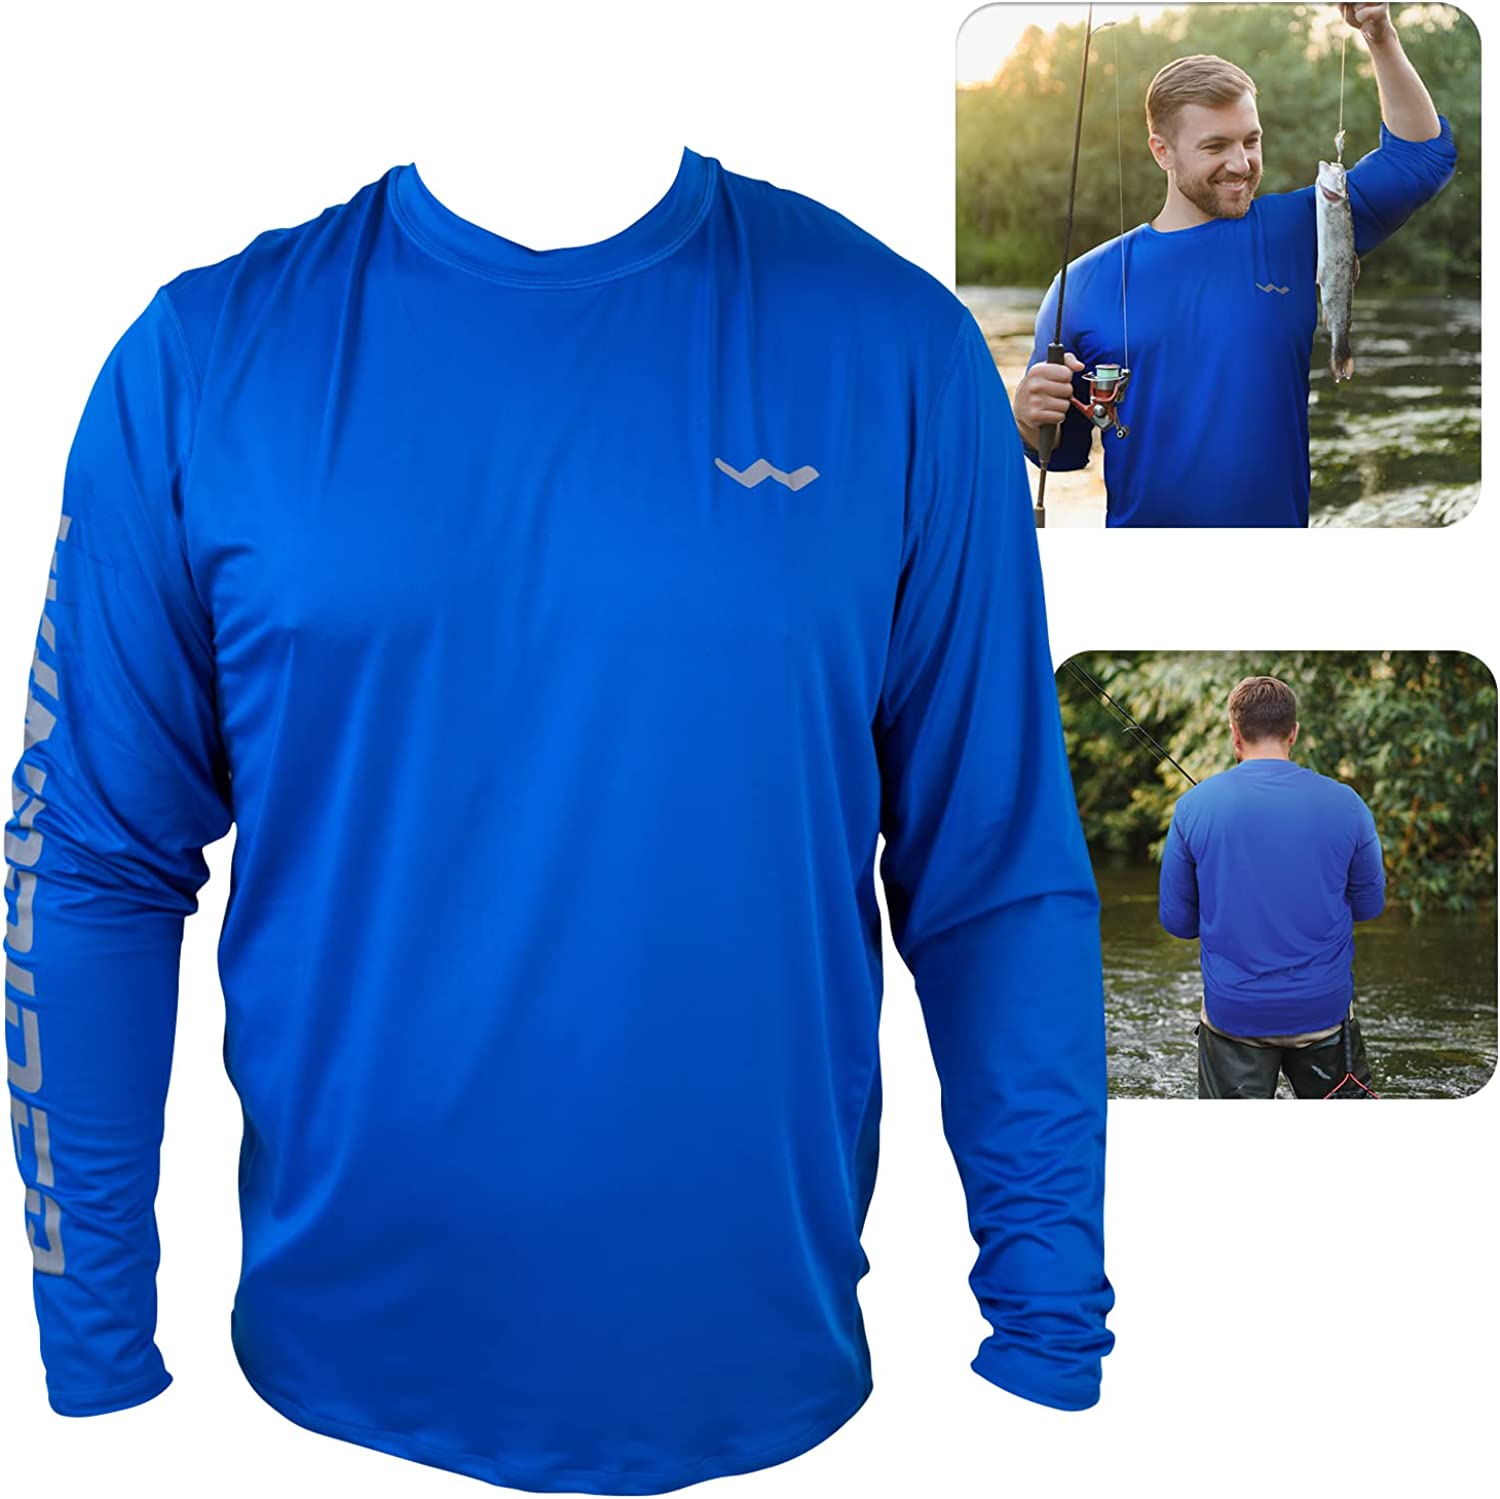 UPF50+ Long Sleeve Fishing Shirts for Men - Vented Sides, Light